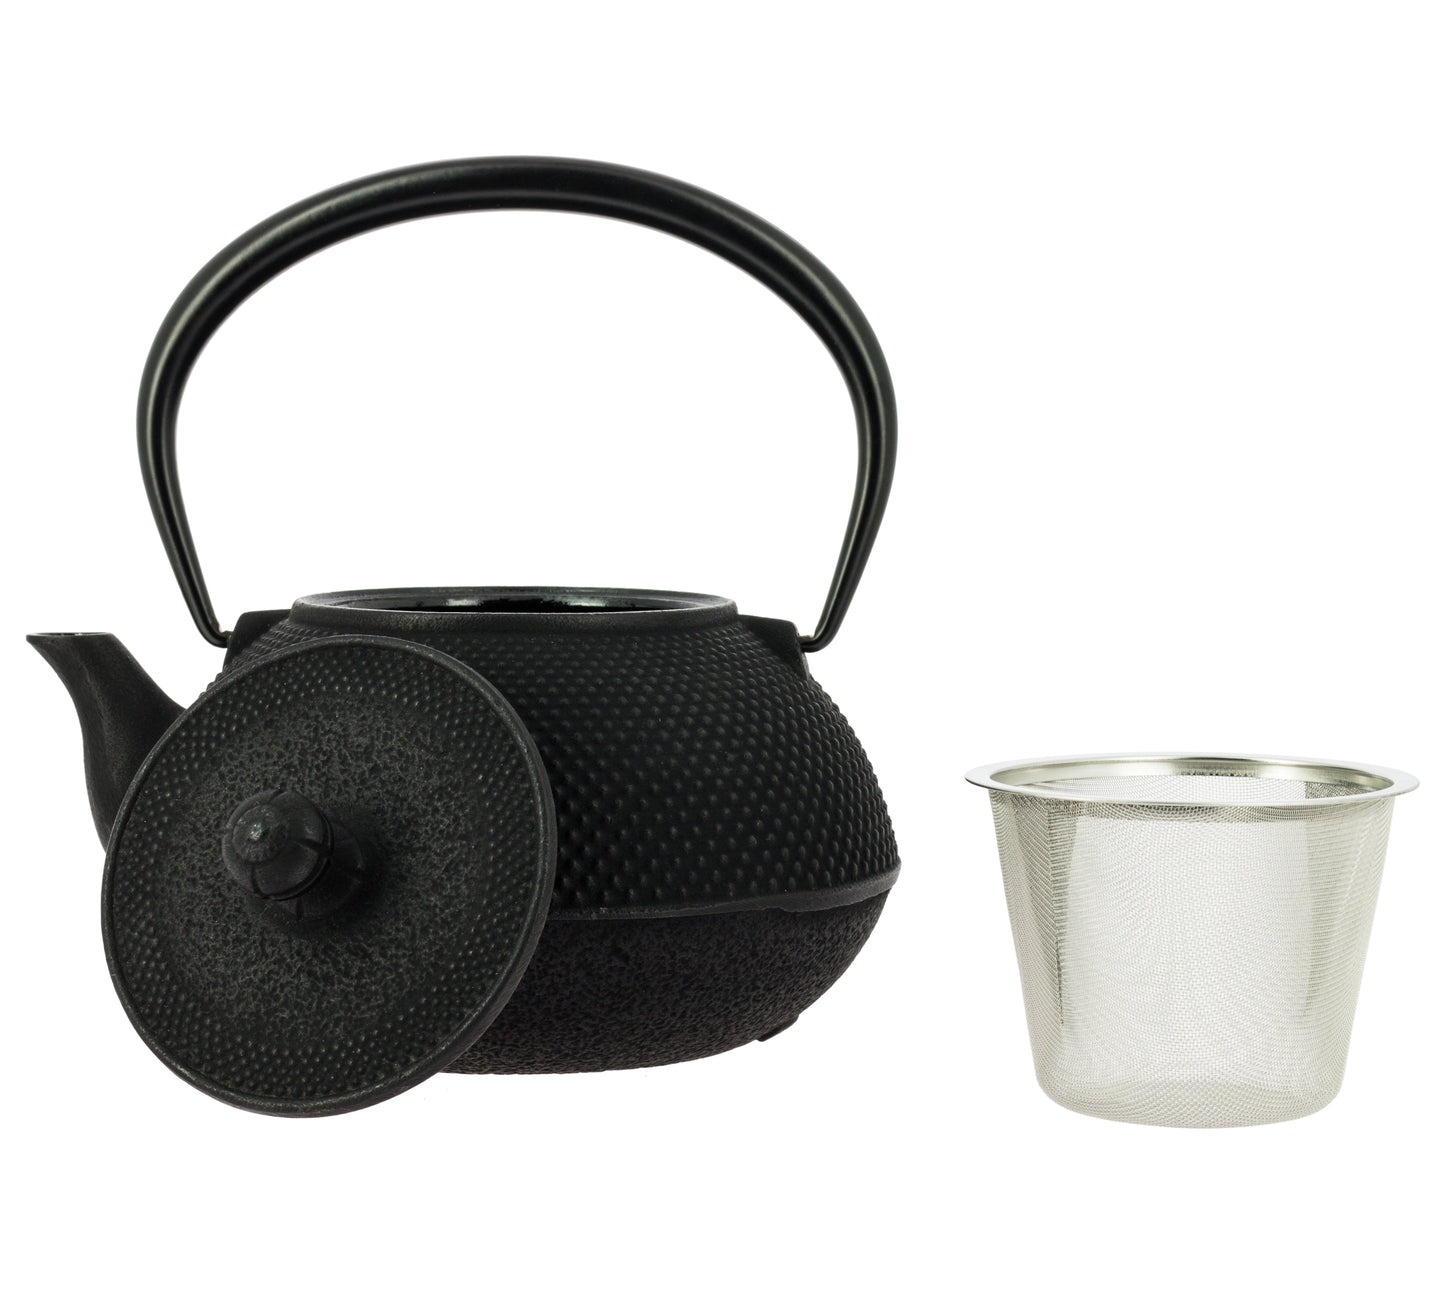 Arare Iwachu Teapot - Black, 1200 ml